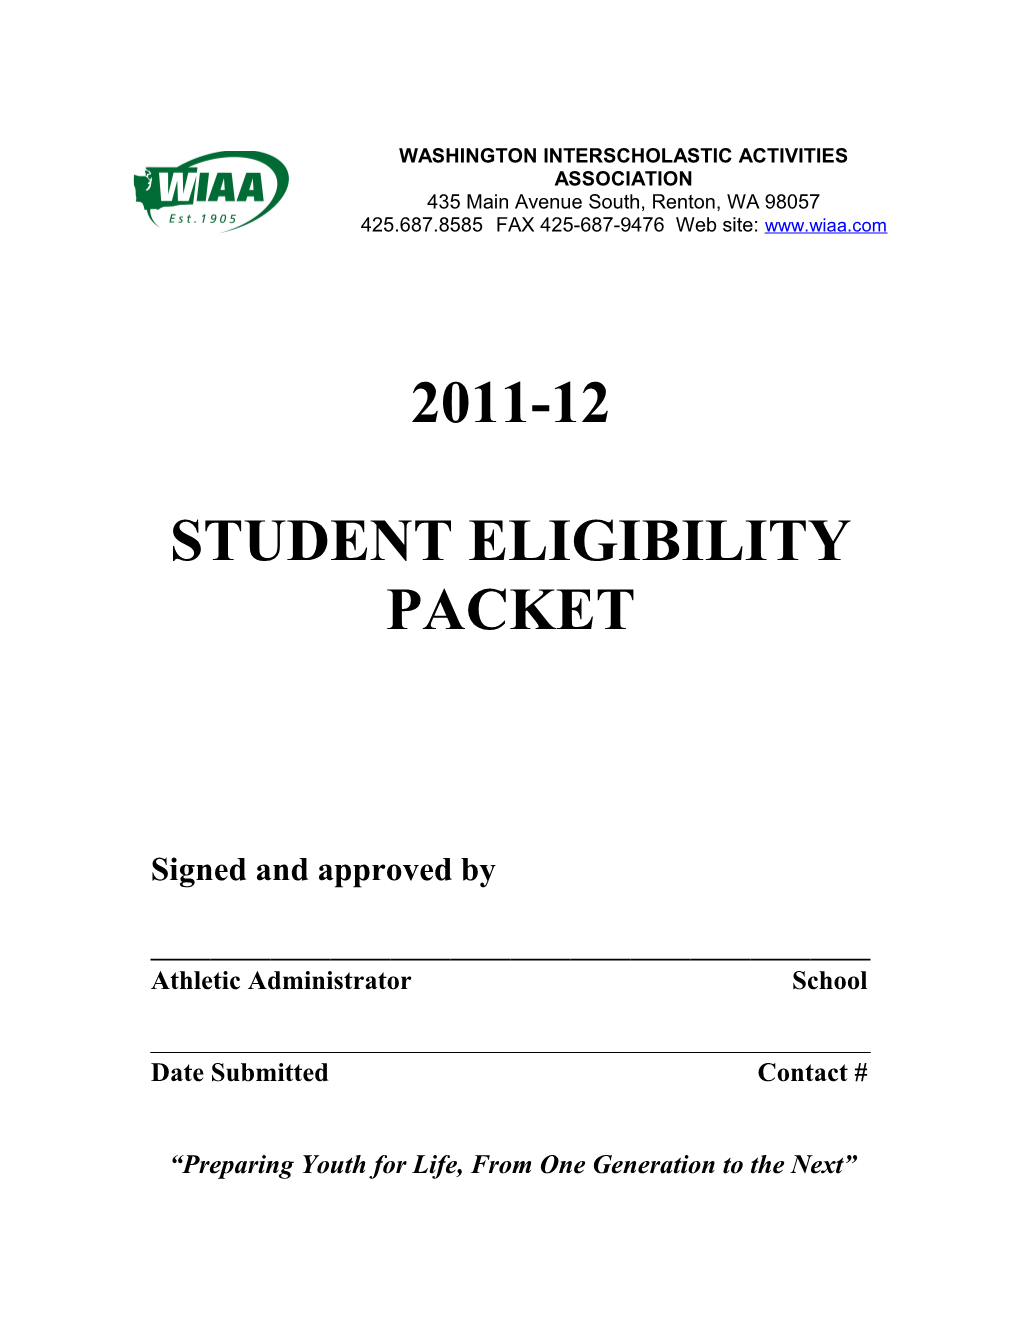 Student Eligibility Packet